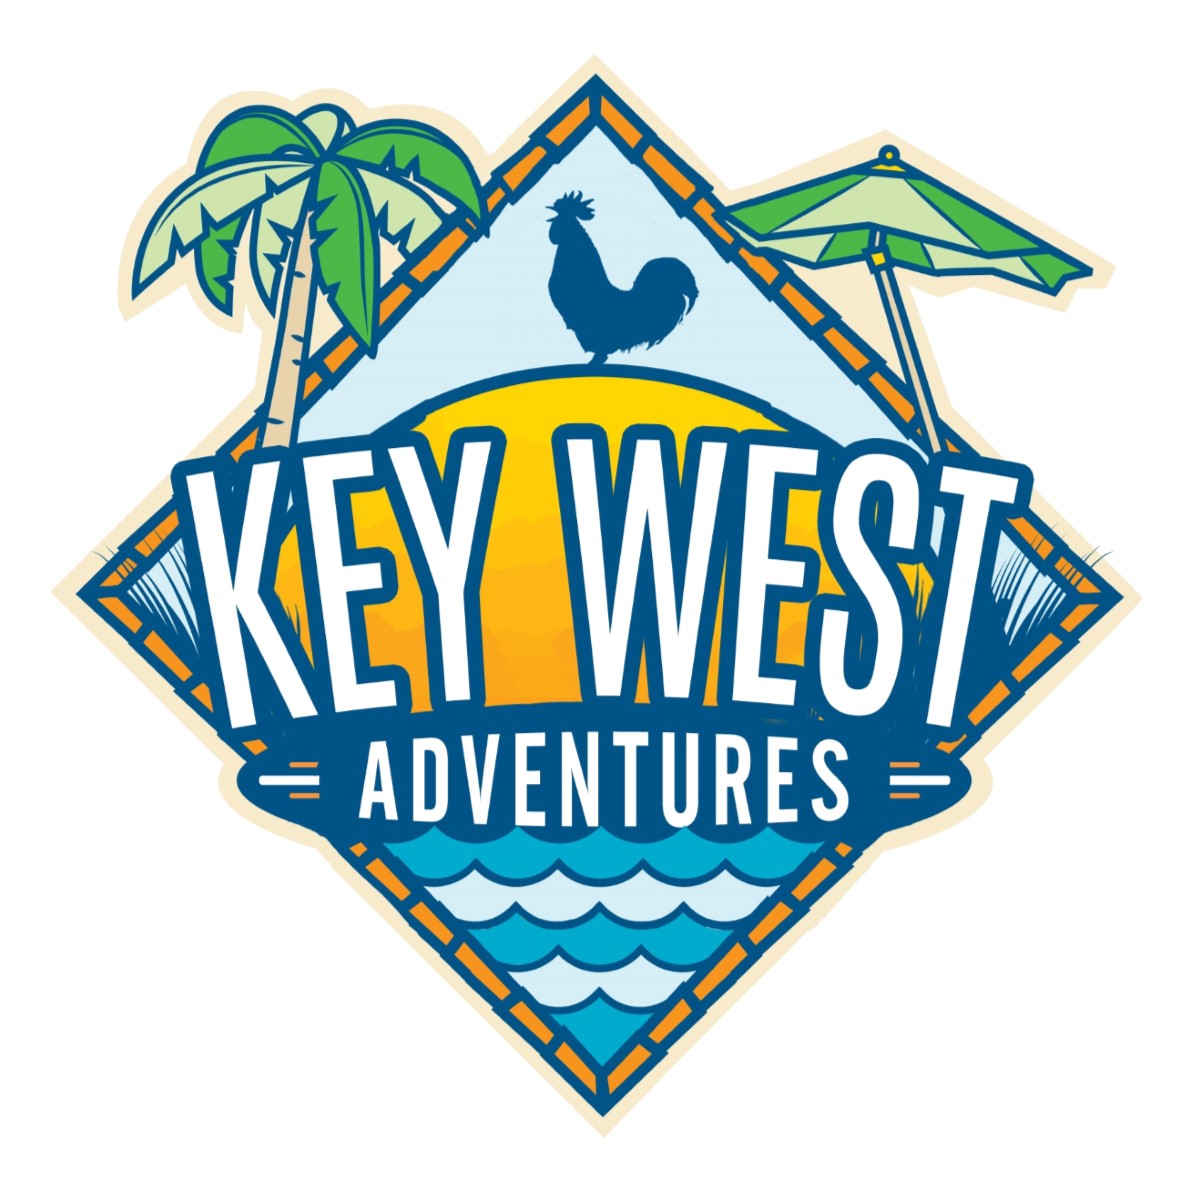 Key West Adventures